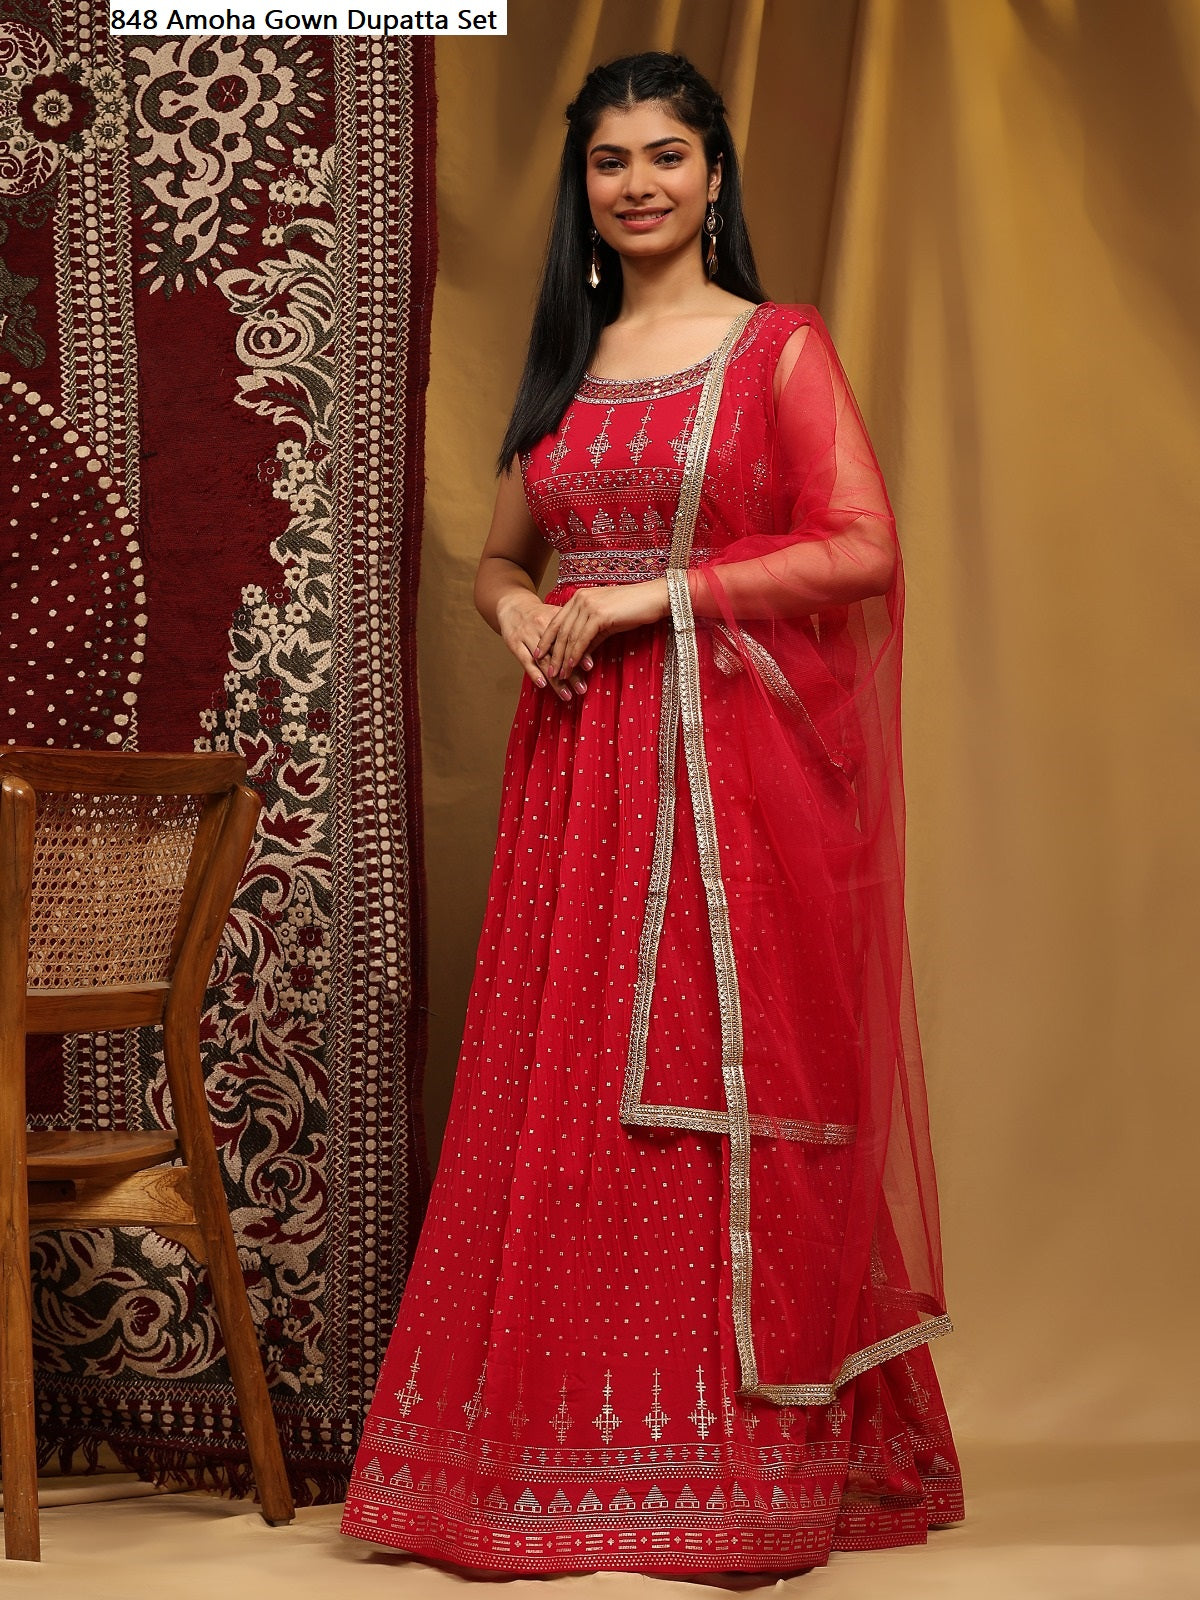 848 Amoha Georgette Gown Dupatta Set Wholesaler India